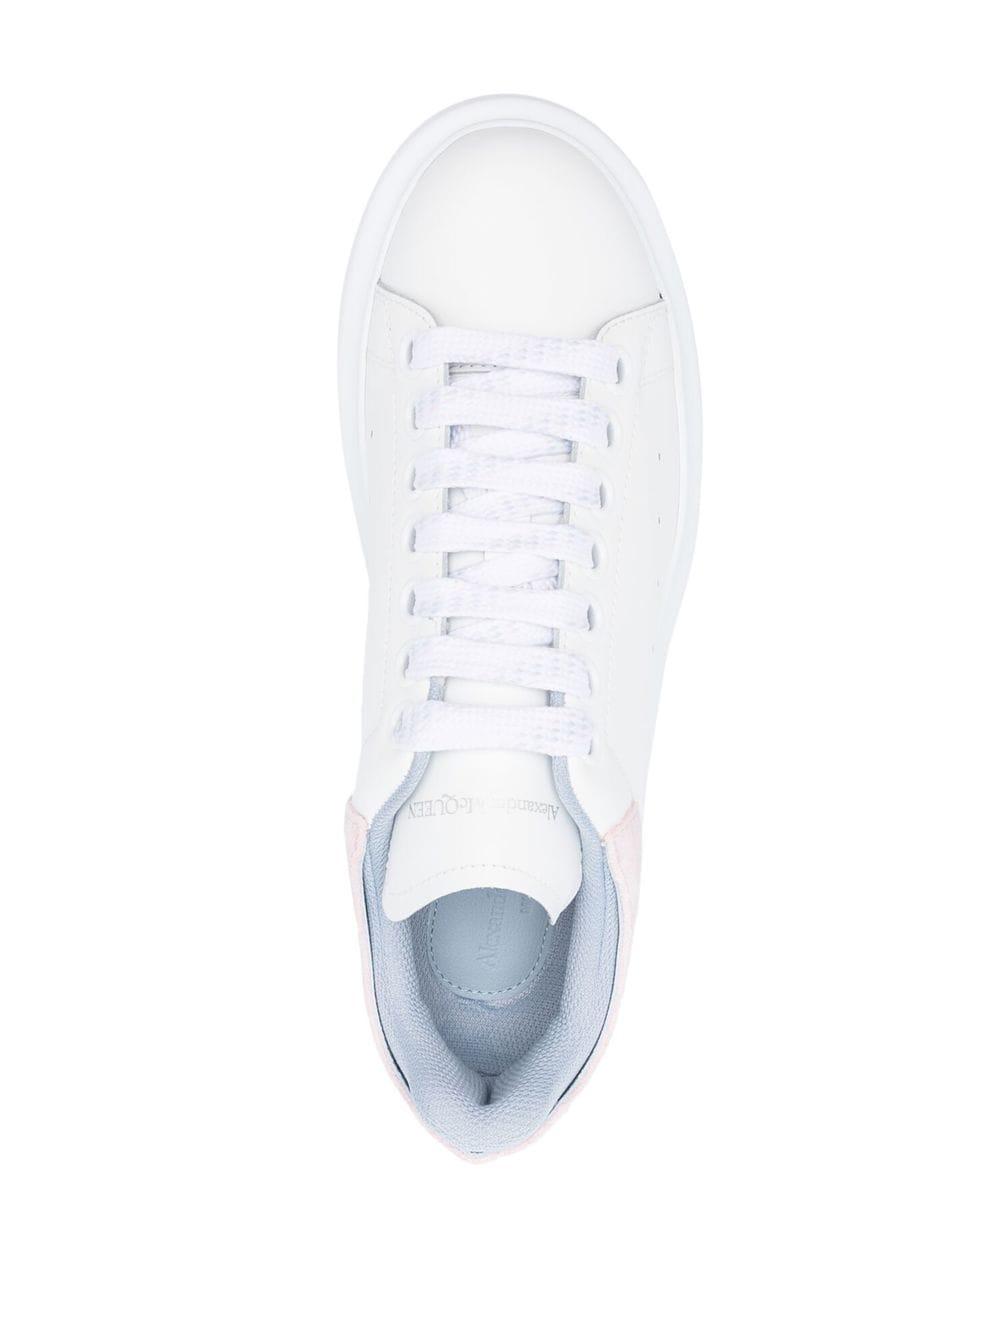 Alexander McQueen Oversized Sole Sneakers in White | Lyst